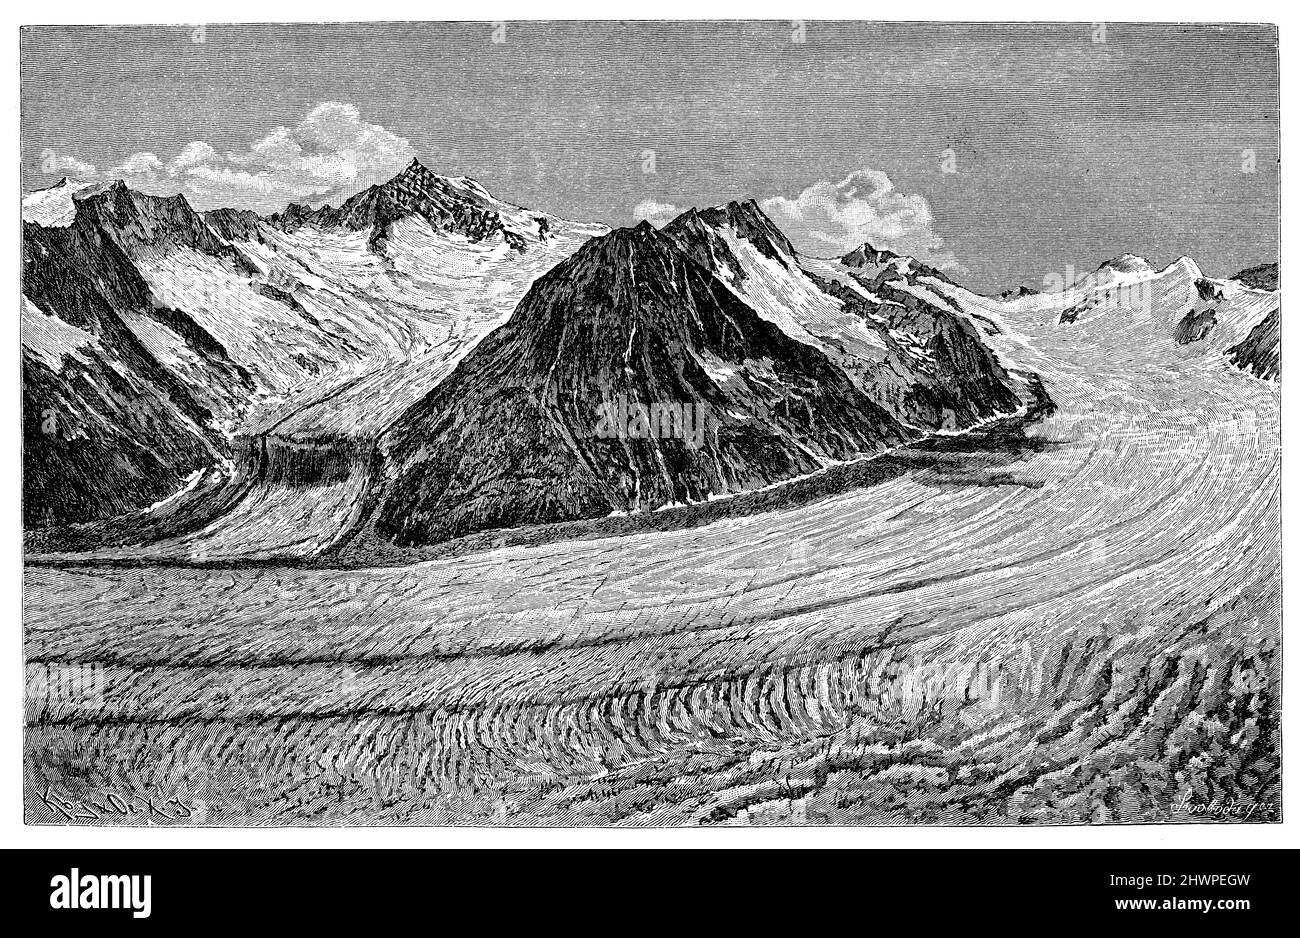 Ghiacciaio di Aletsch nell'Oberland Bernese, , (atlante, 1909), Aletschgletscher im Berner Oberland, Glacier d'Aletsch dans l'Oberland bernois Foto Stock